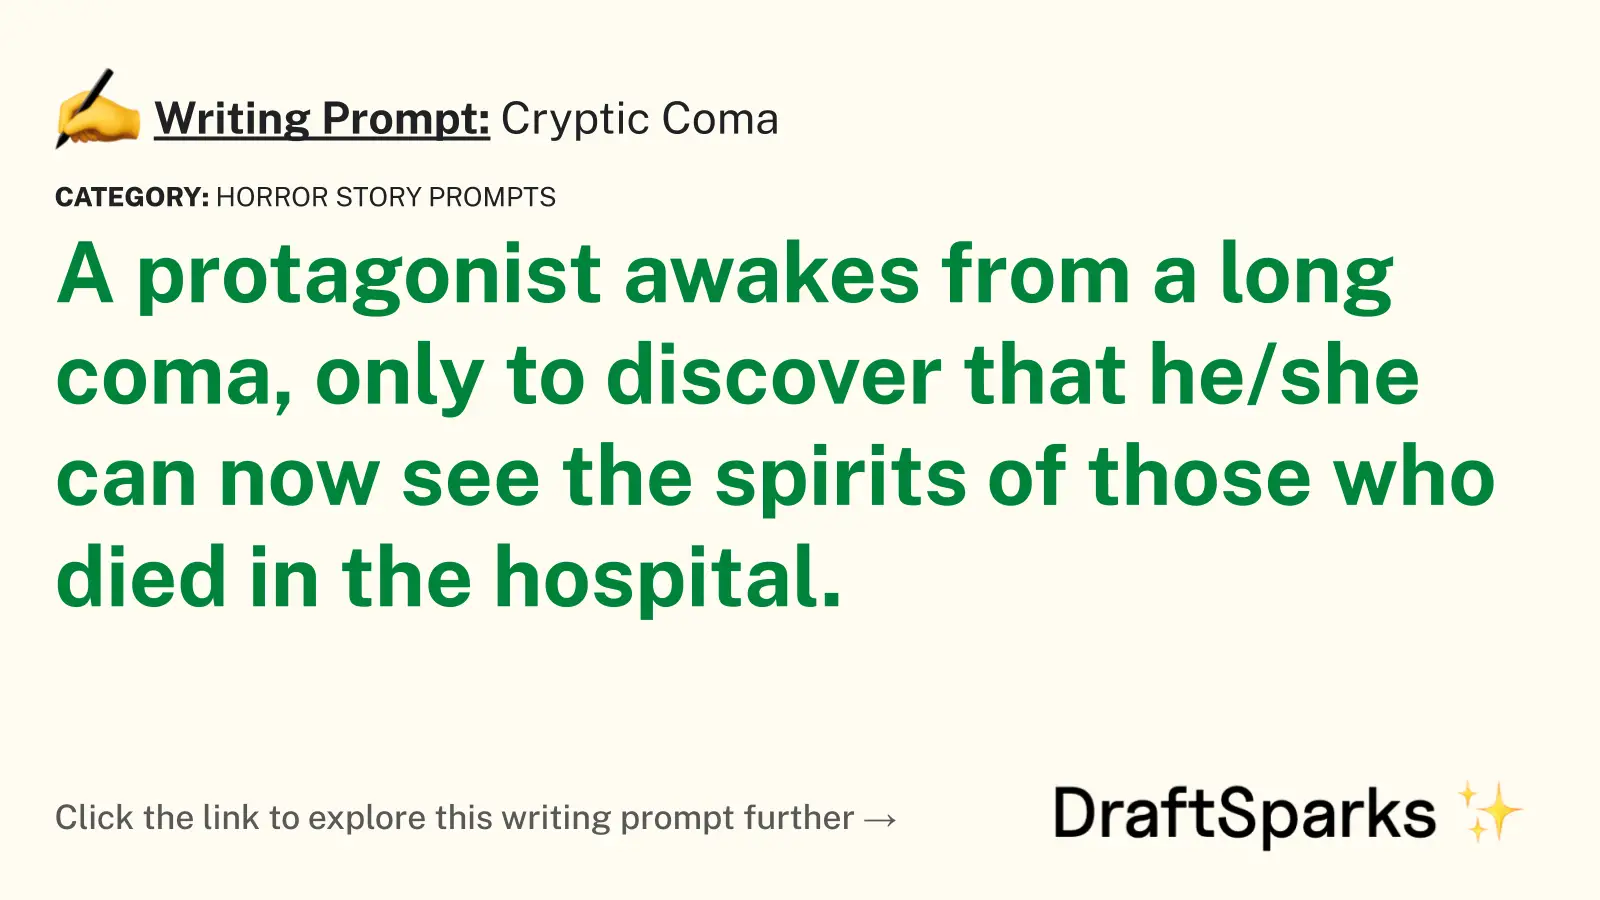 Cryptic Coma